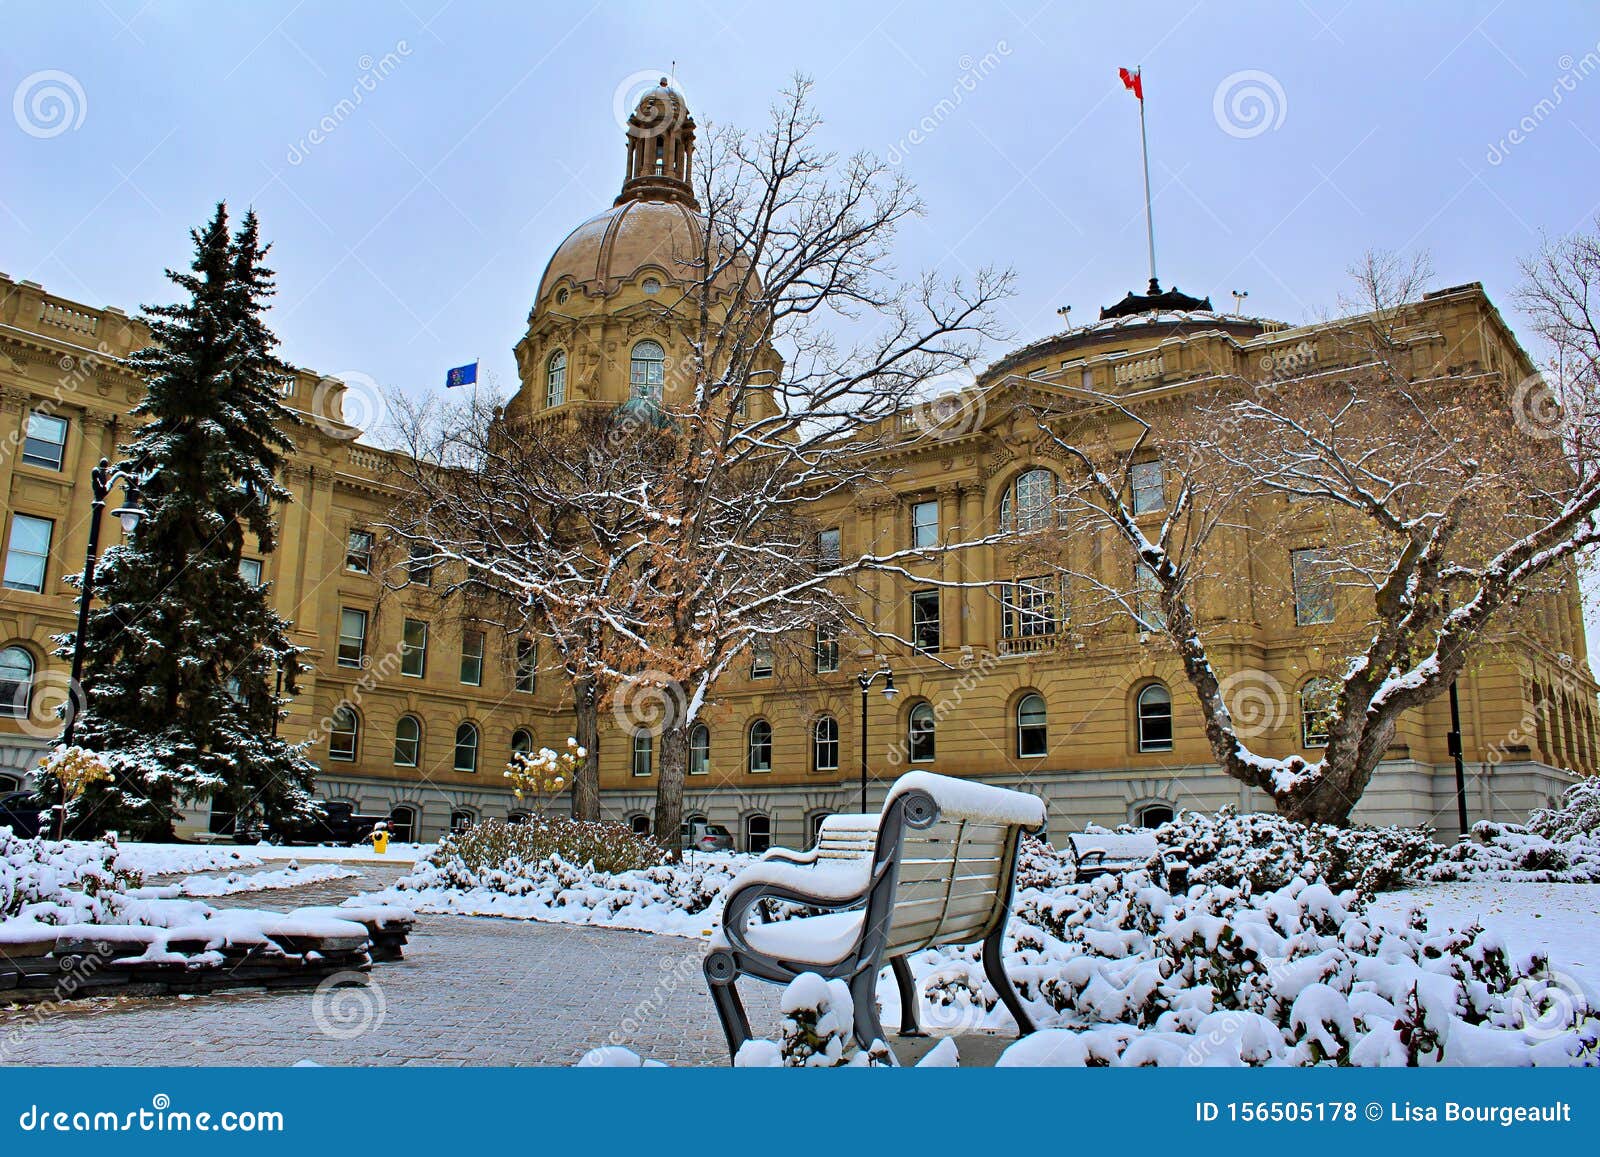 winter day at the alberta legislature